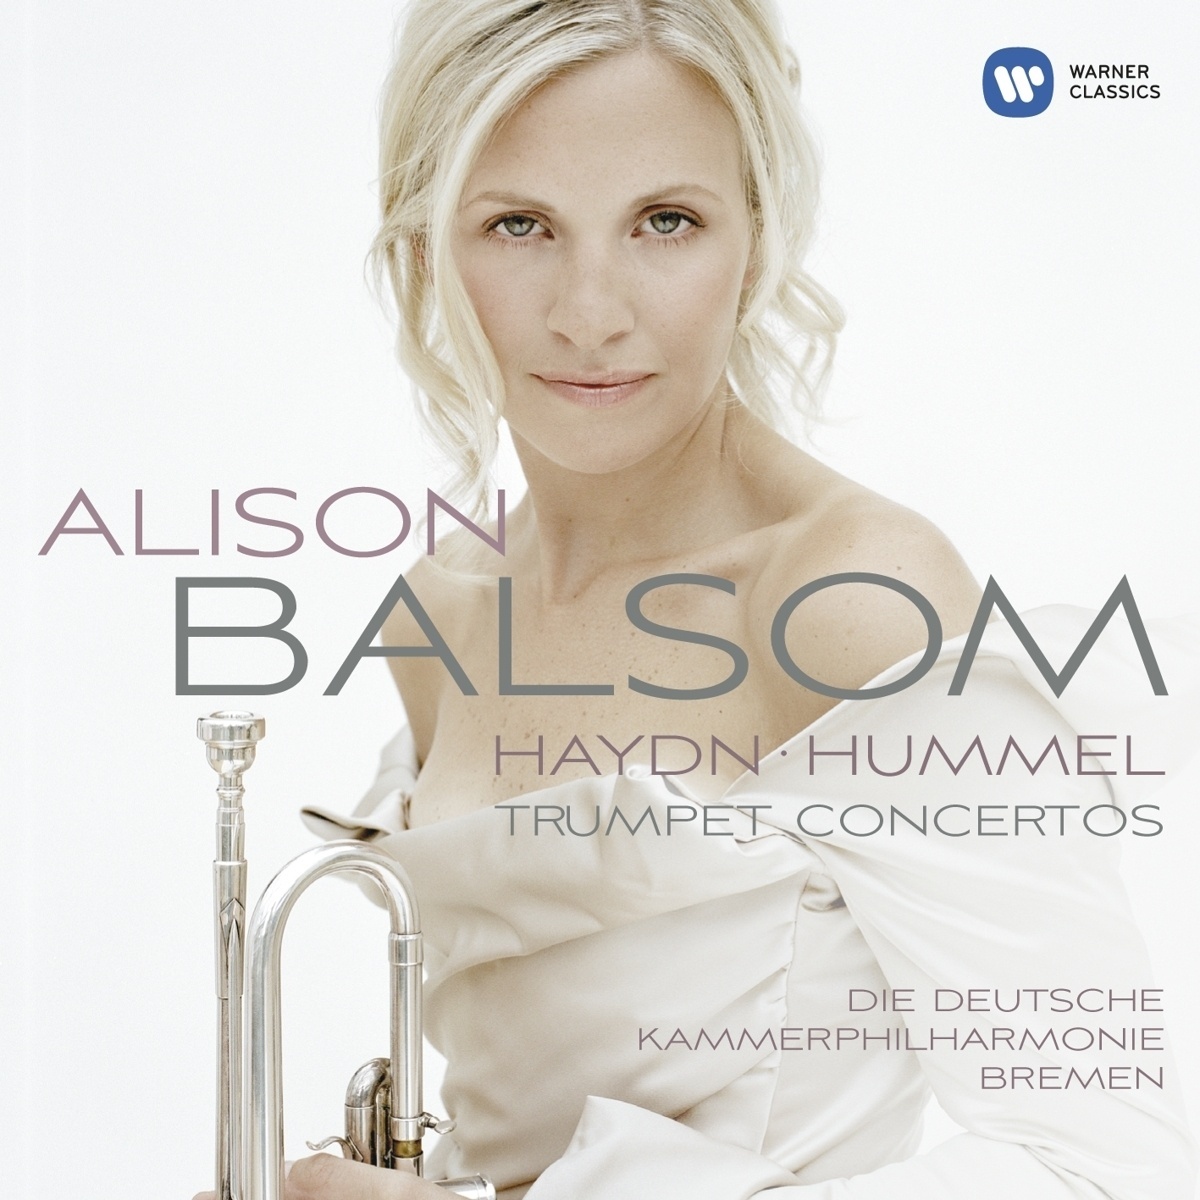 Alison Balsom - Trumpet Concertos  CD - Alison Balsom  Dkp. (CD)